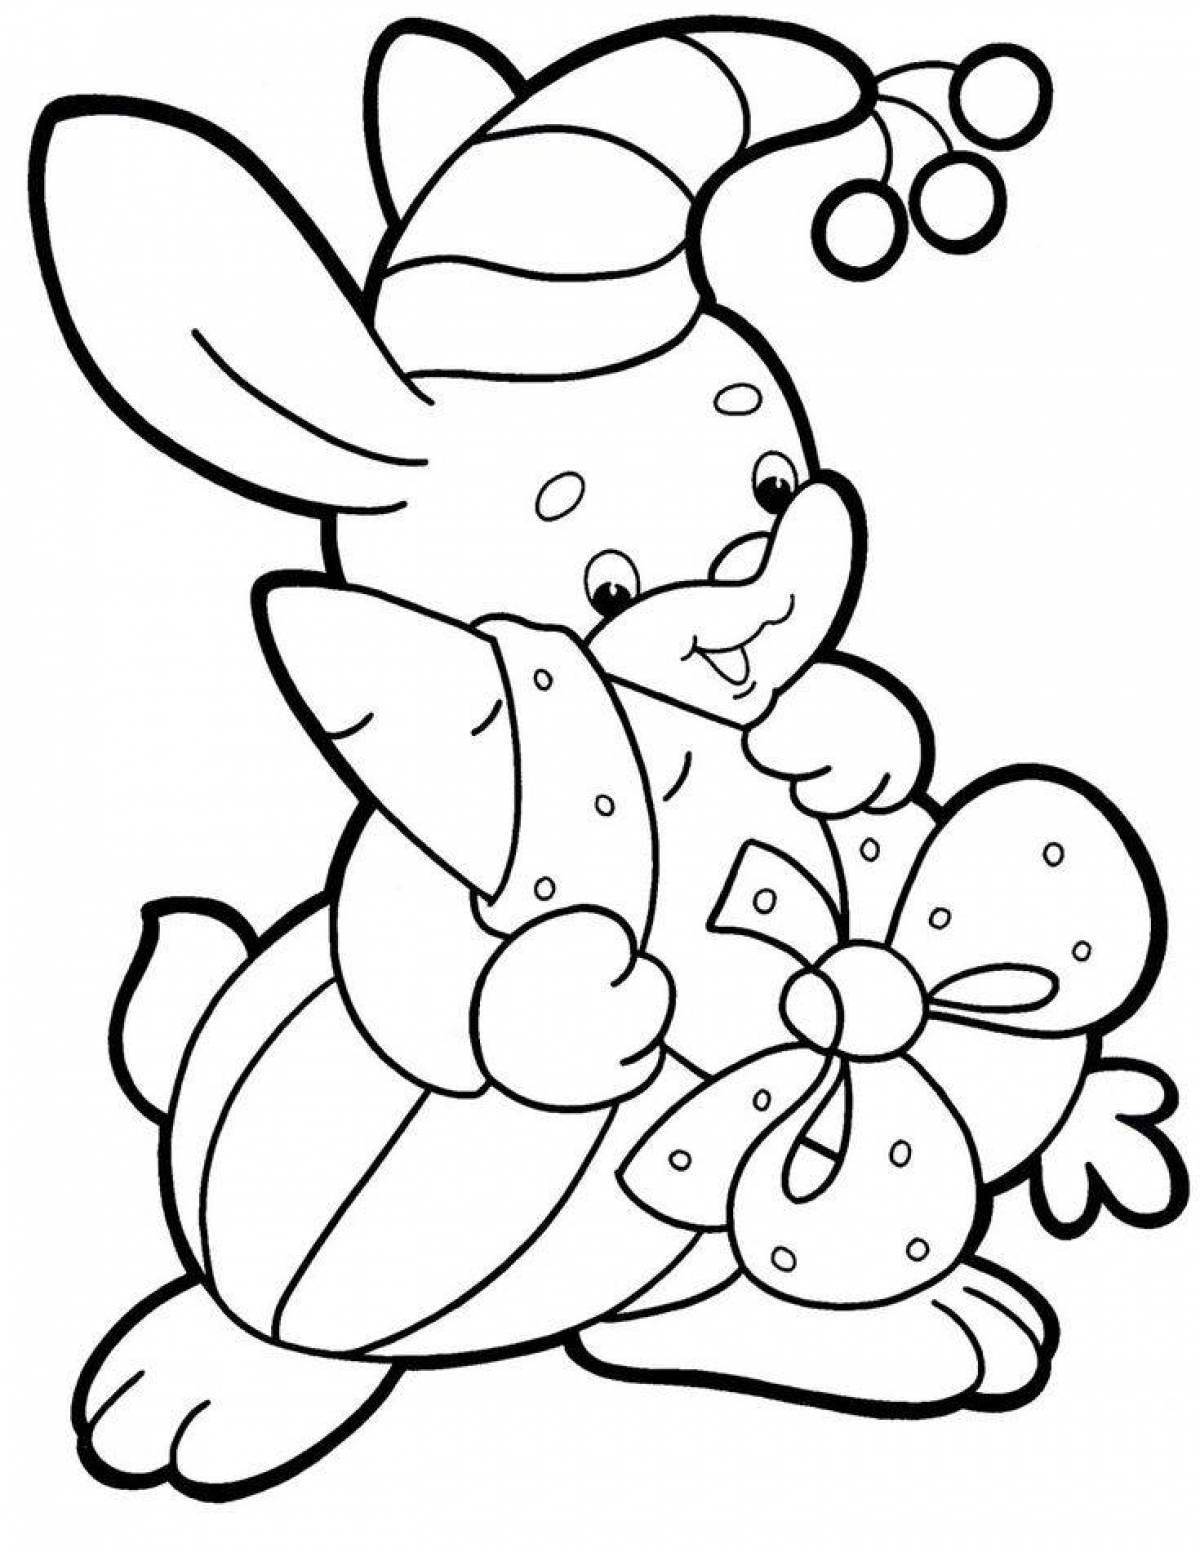 Irresistible Christmas rabbit coloring book